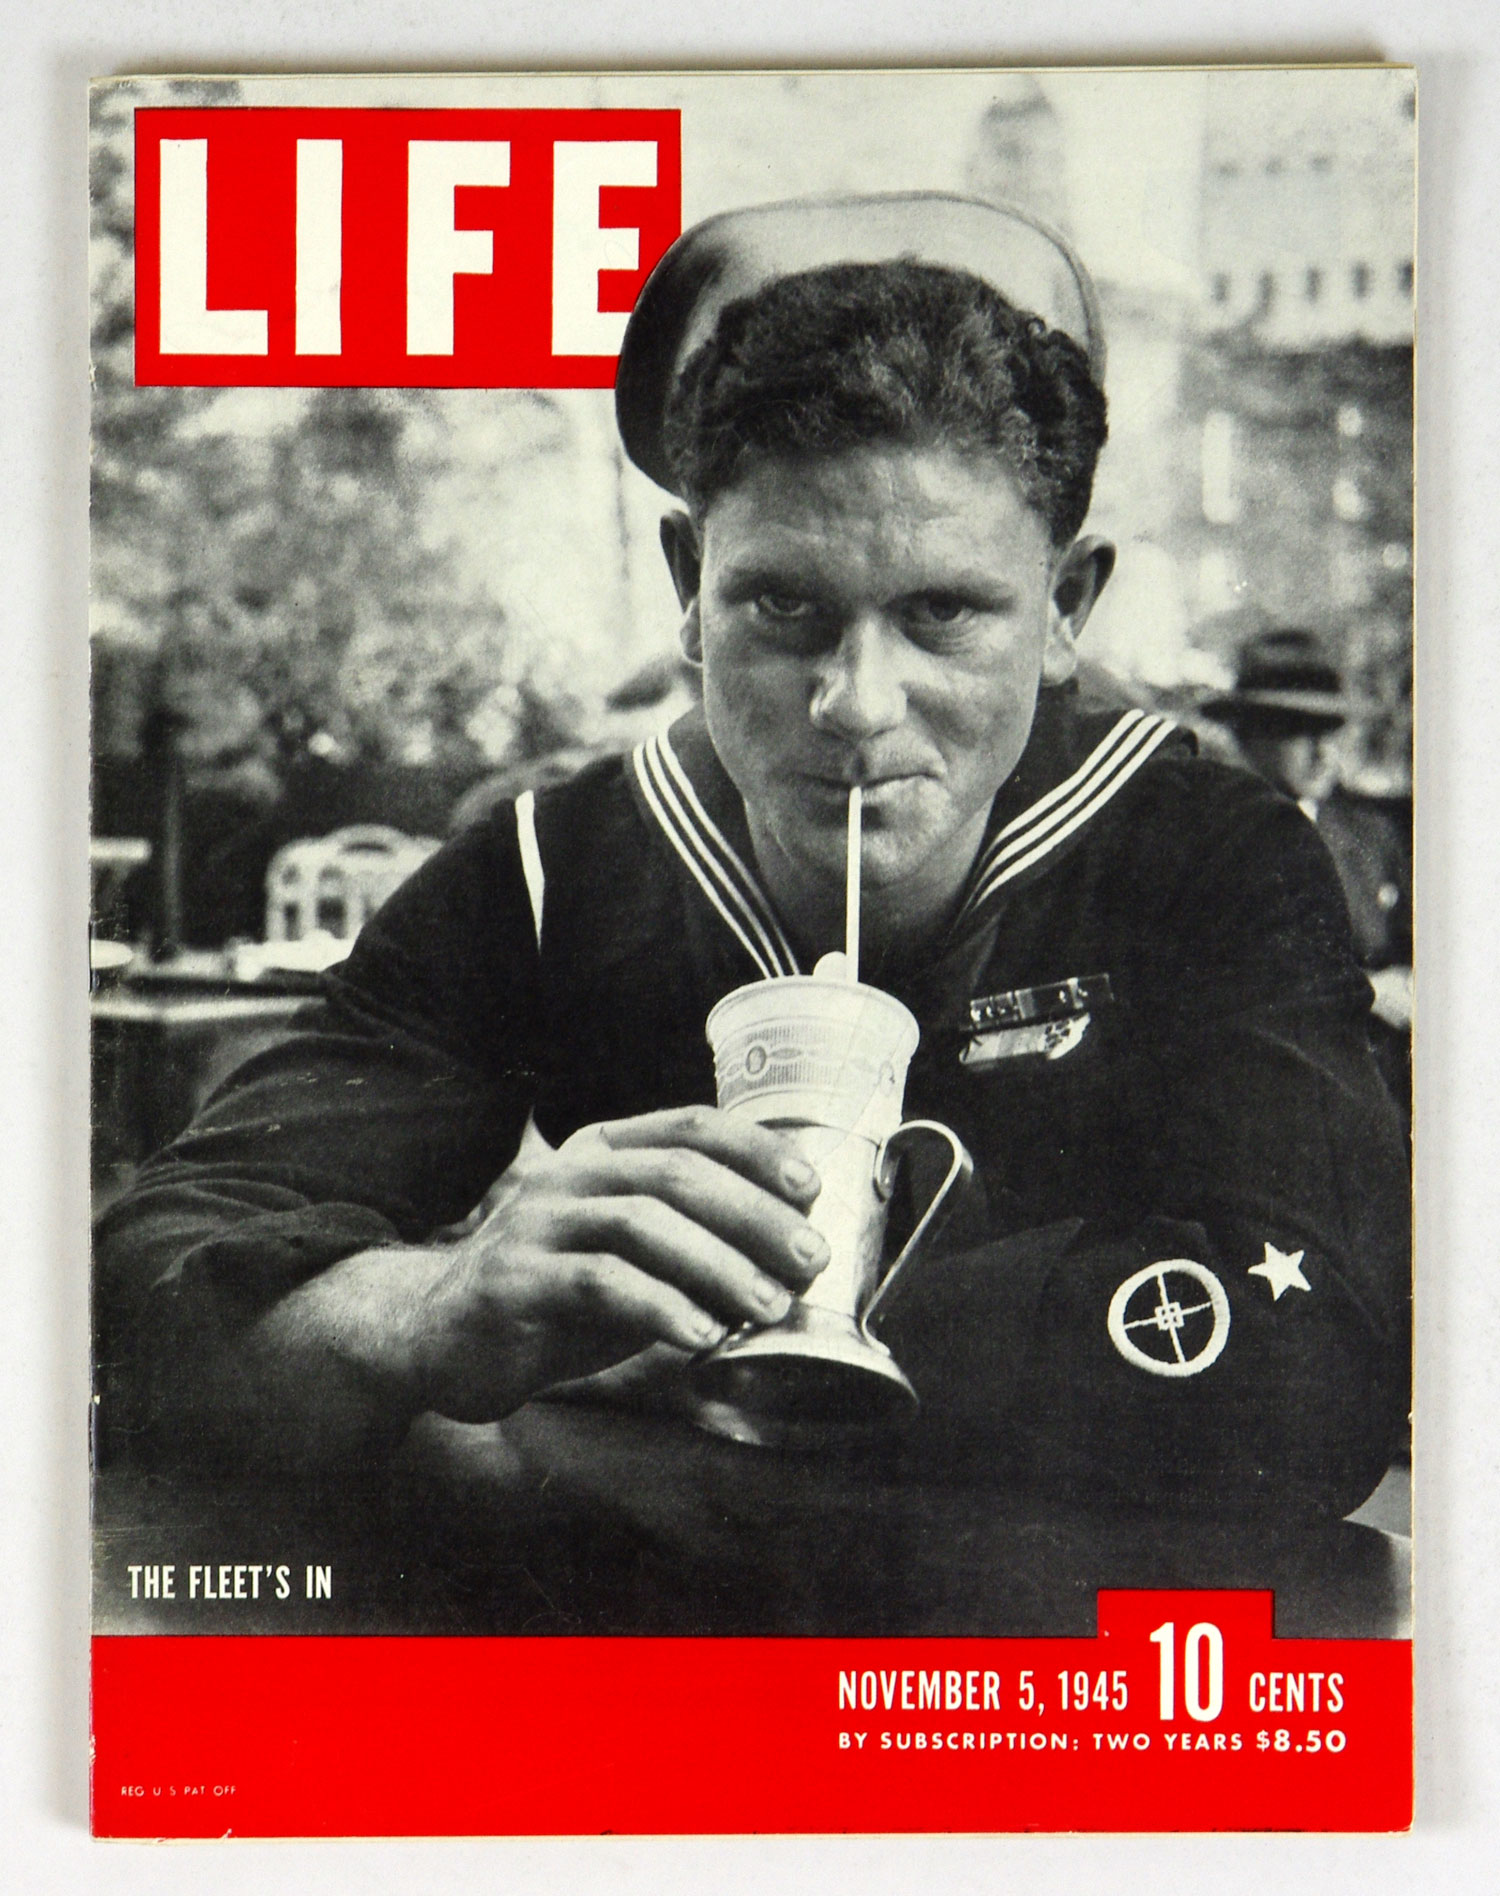 LIFE Magazine Back Issue 1945 Nov 5 The Fleet's In